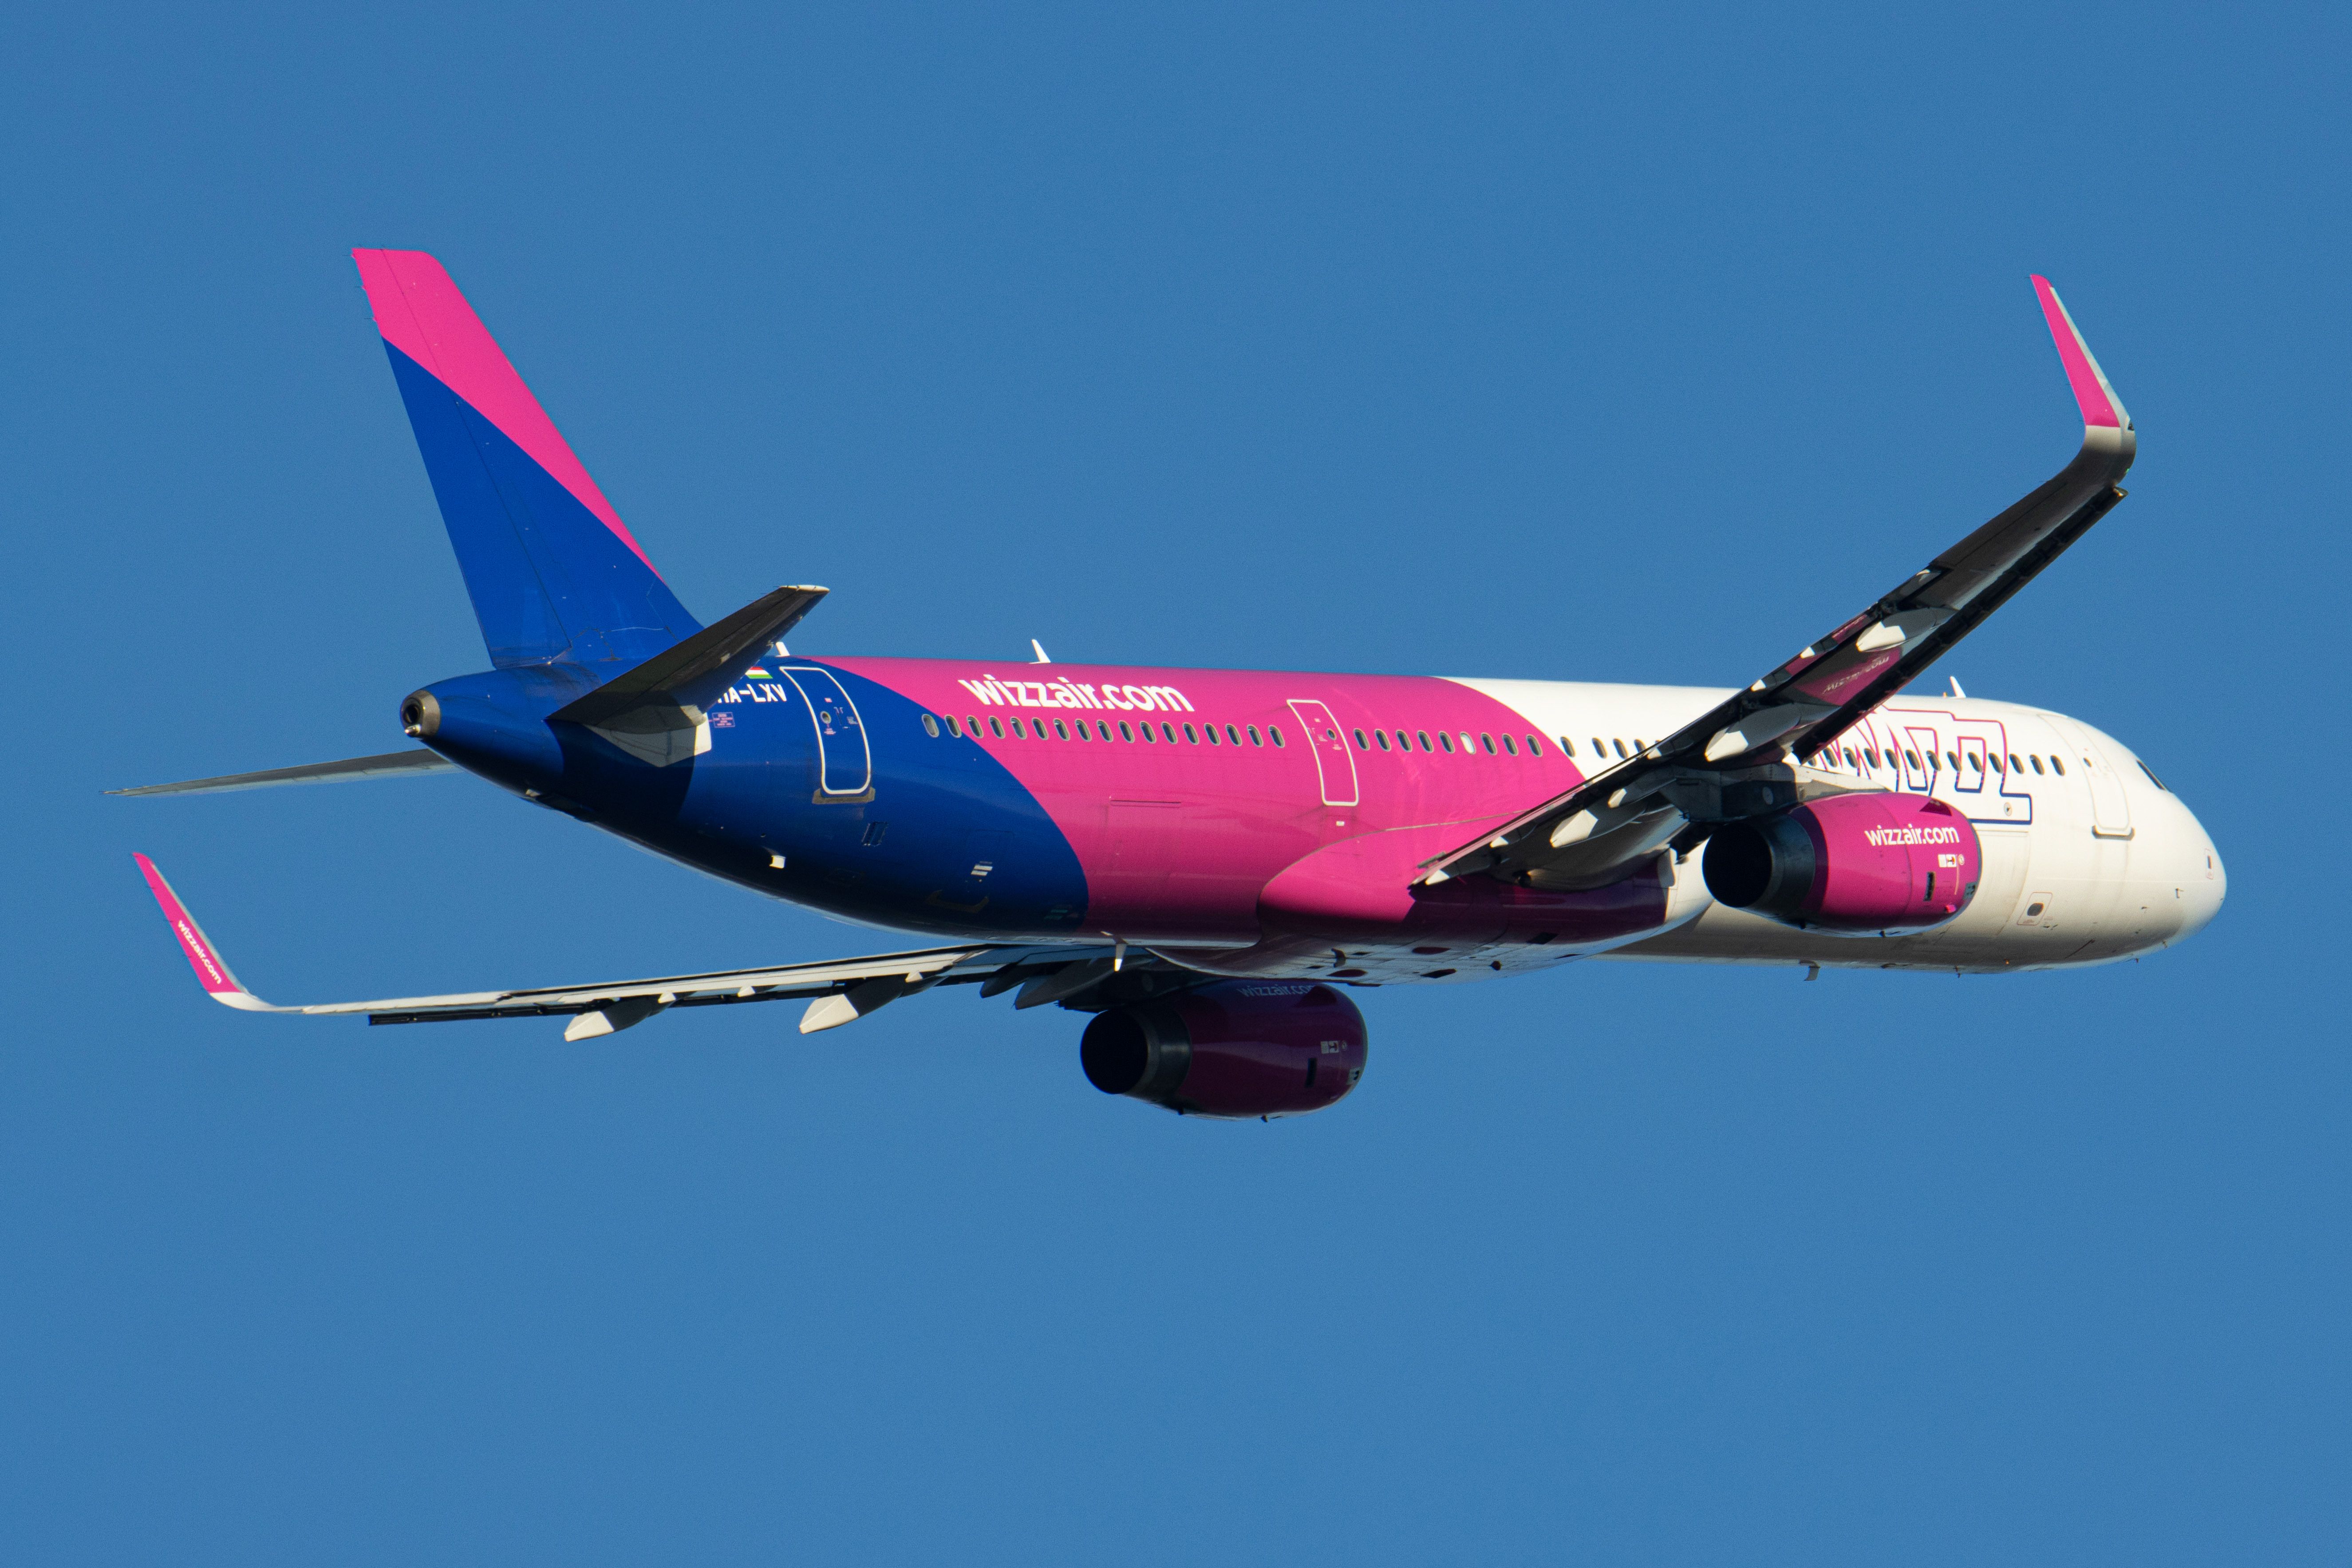 Wizz aircraft A321 in air